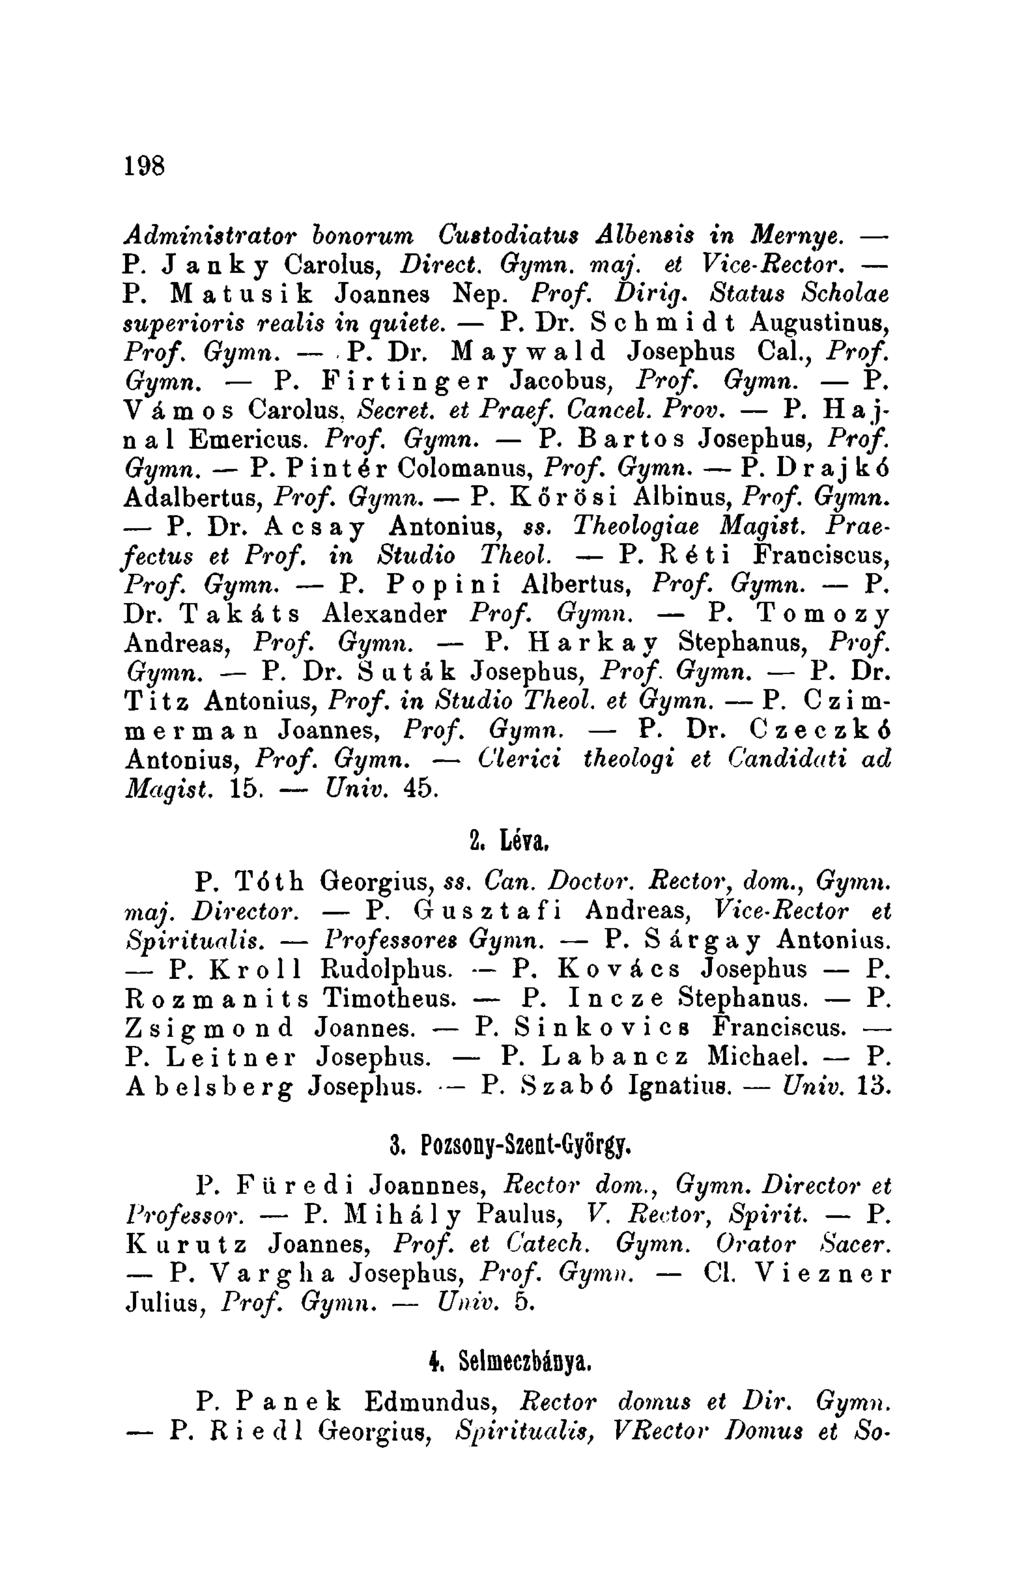 198 Admínistrator bonorum Custodiatus Albensi«in Mernye. P. J a n k y Carolus, Direct. Gymn. maj. et Vice-Bector. P. M a t u s i k Joannes Nep. Prof. Diriq.